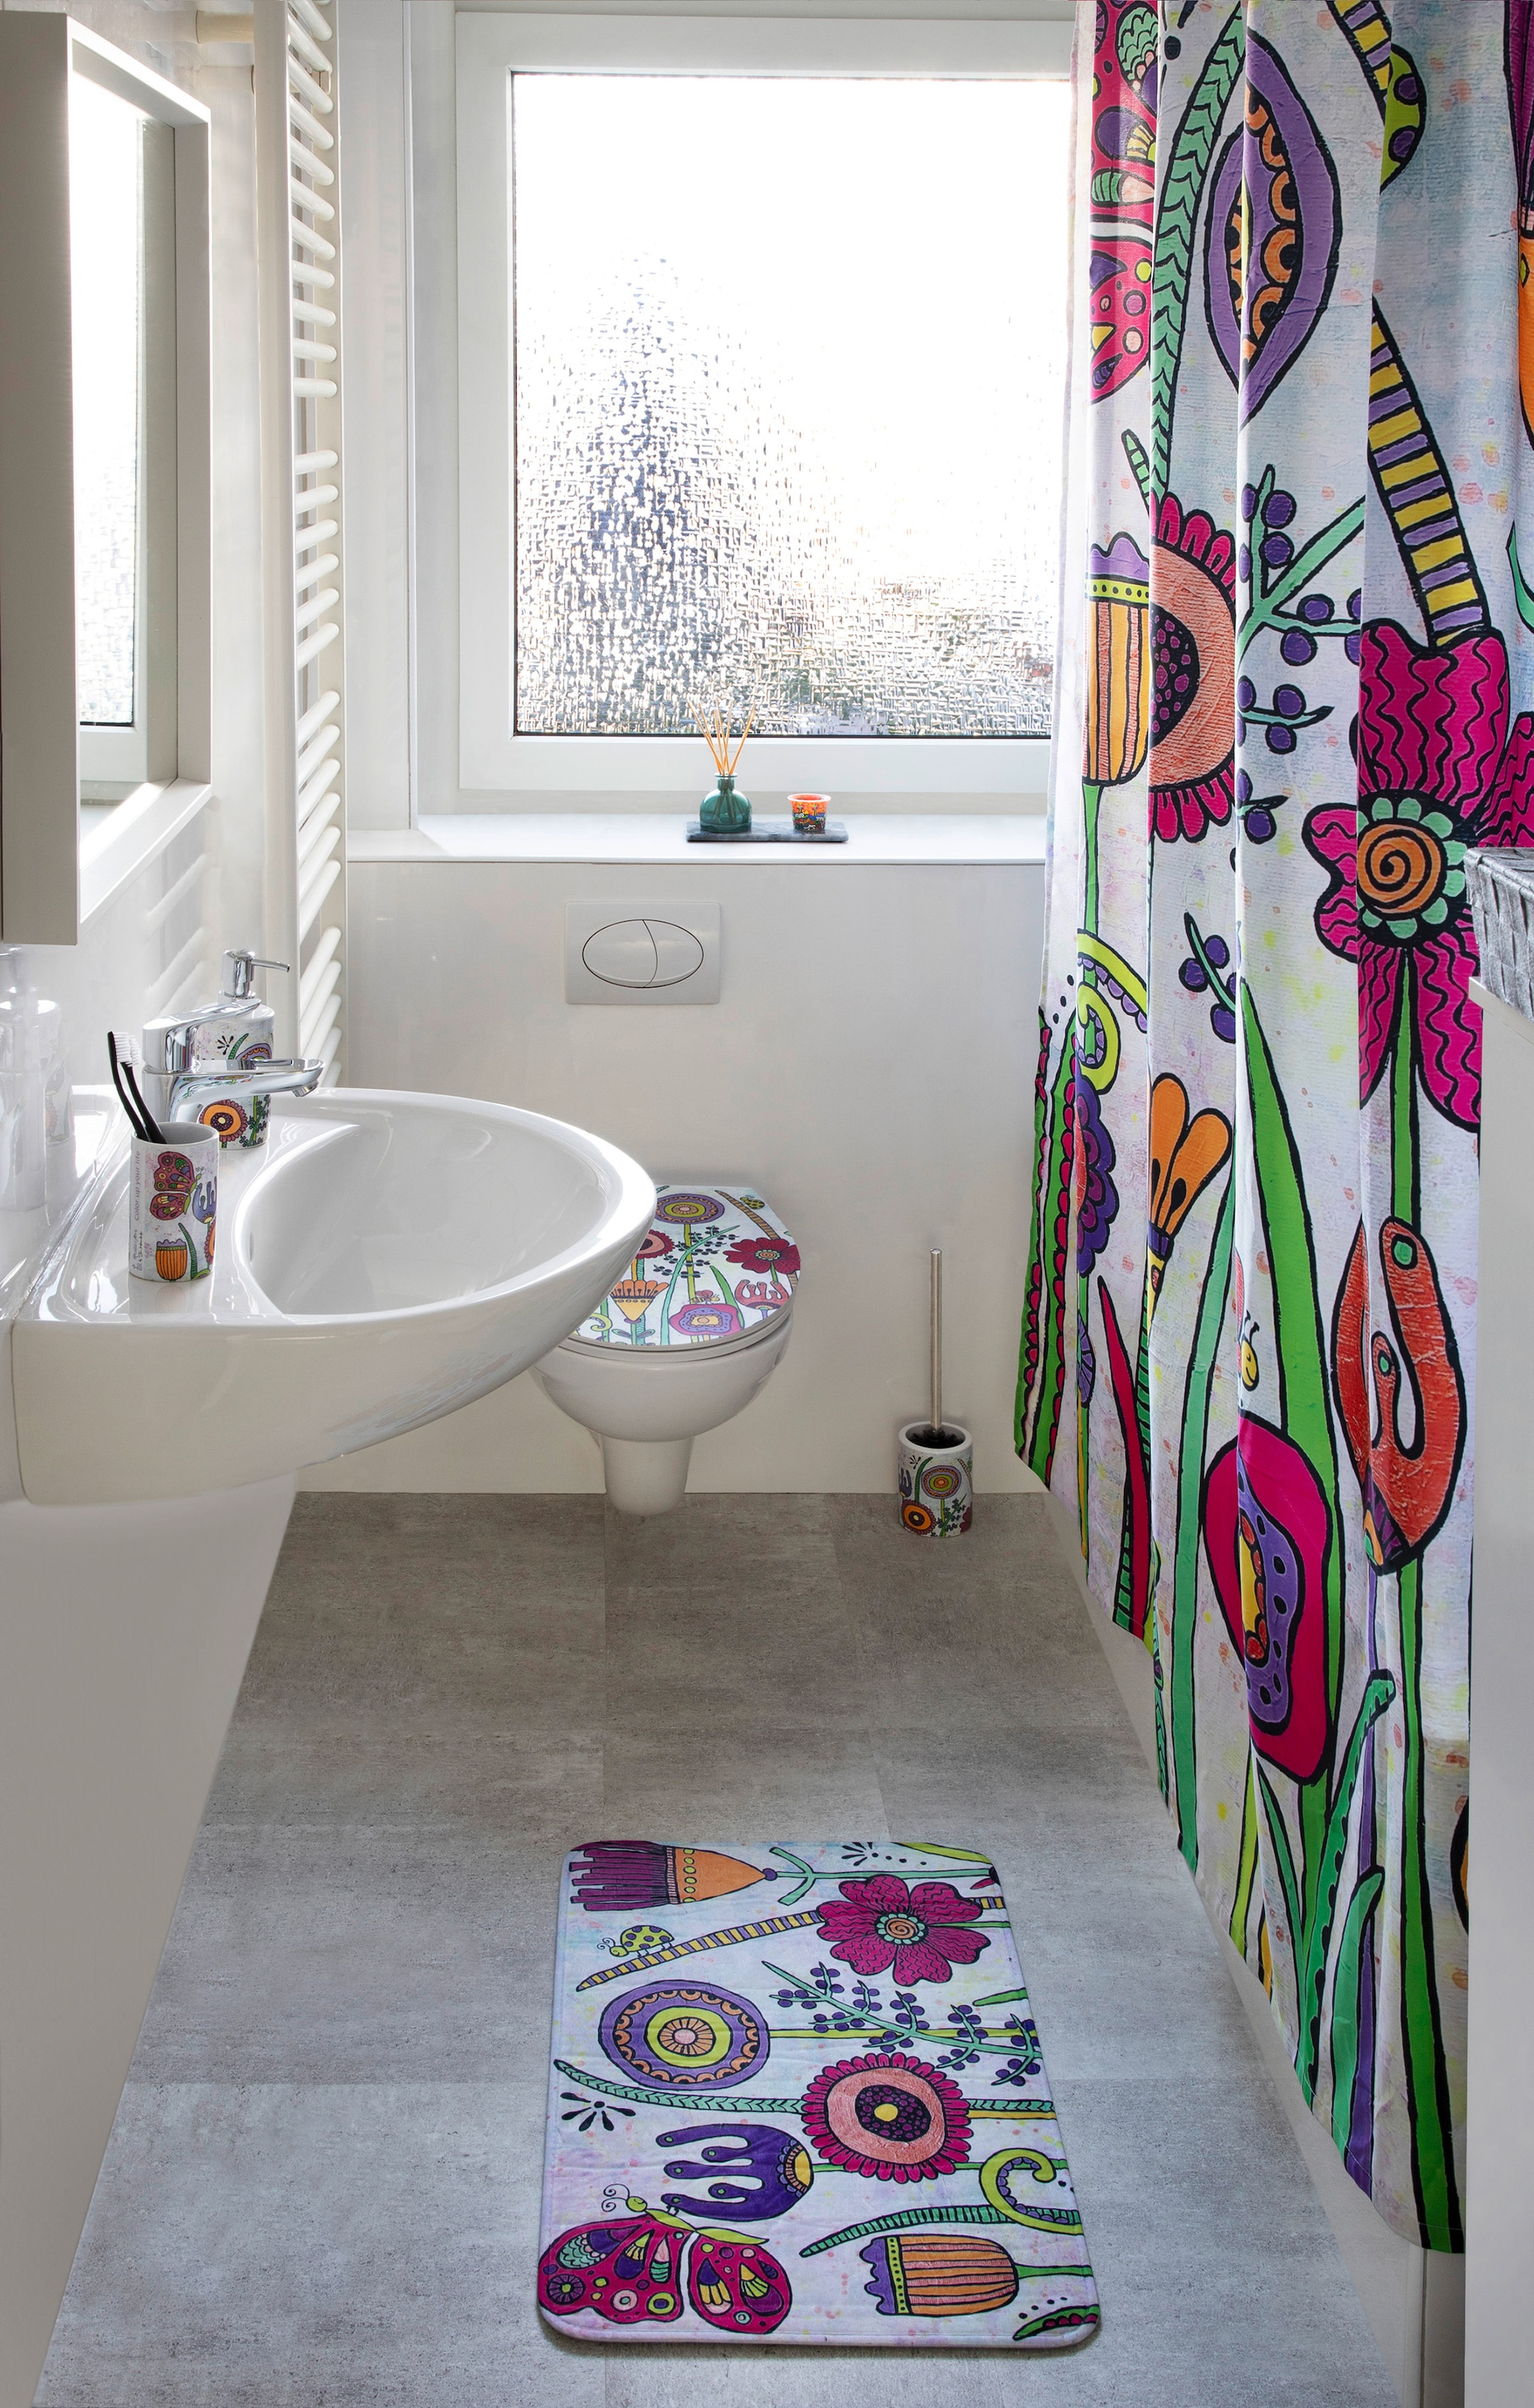 WENKO WC-Garnitur »Rollin'Art Full Bloom«, aus Keramik, freistehend, inkl. WC-Bürste